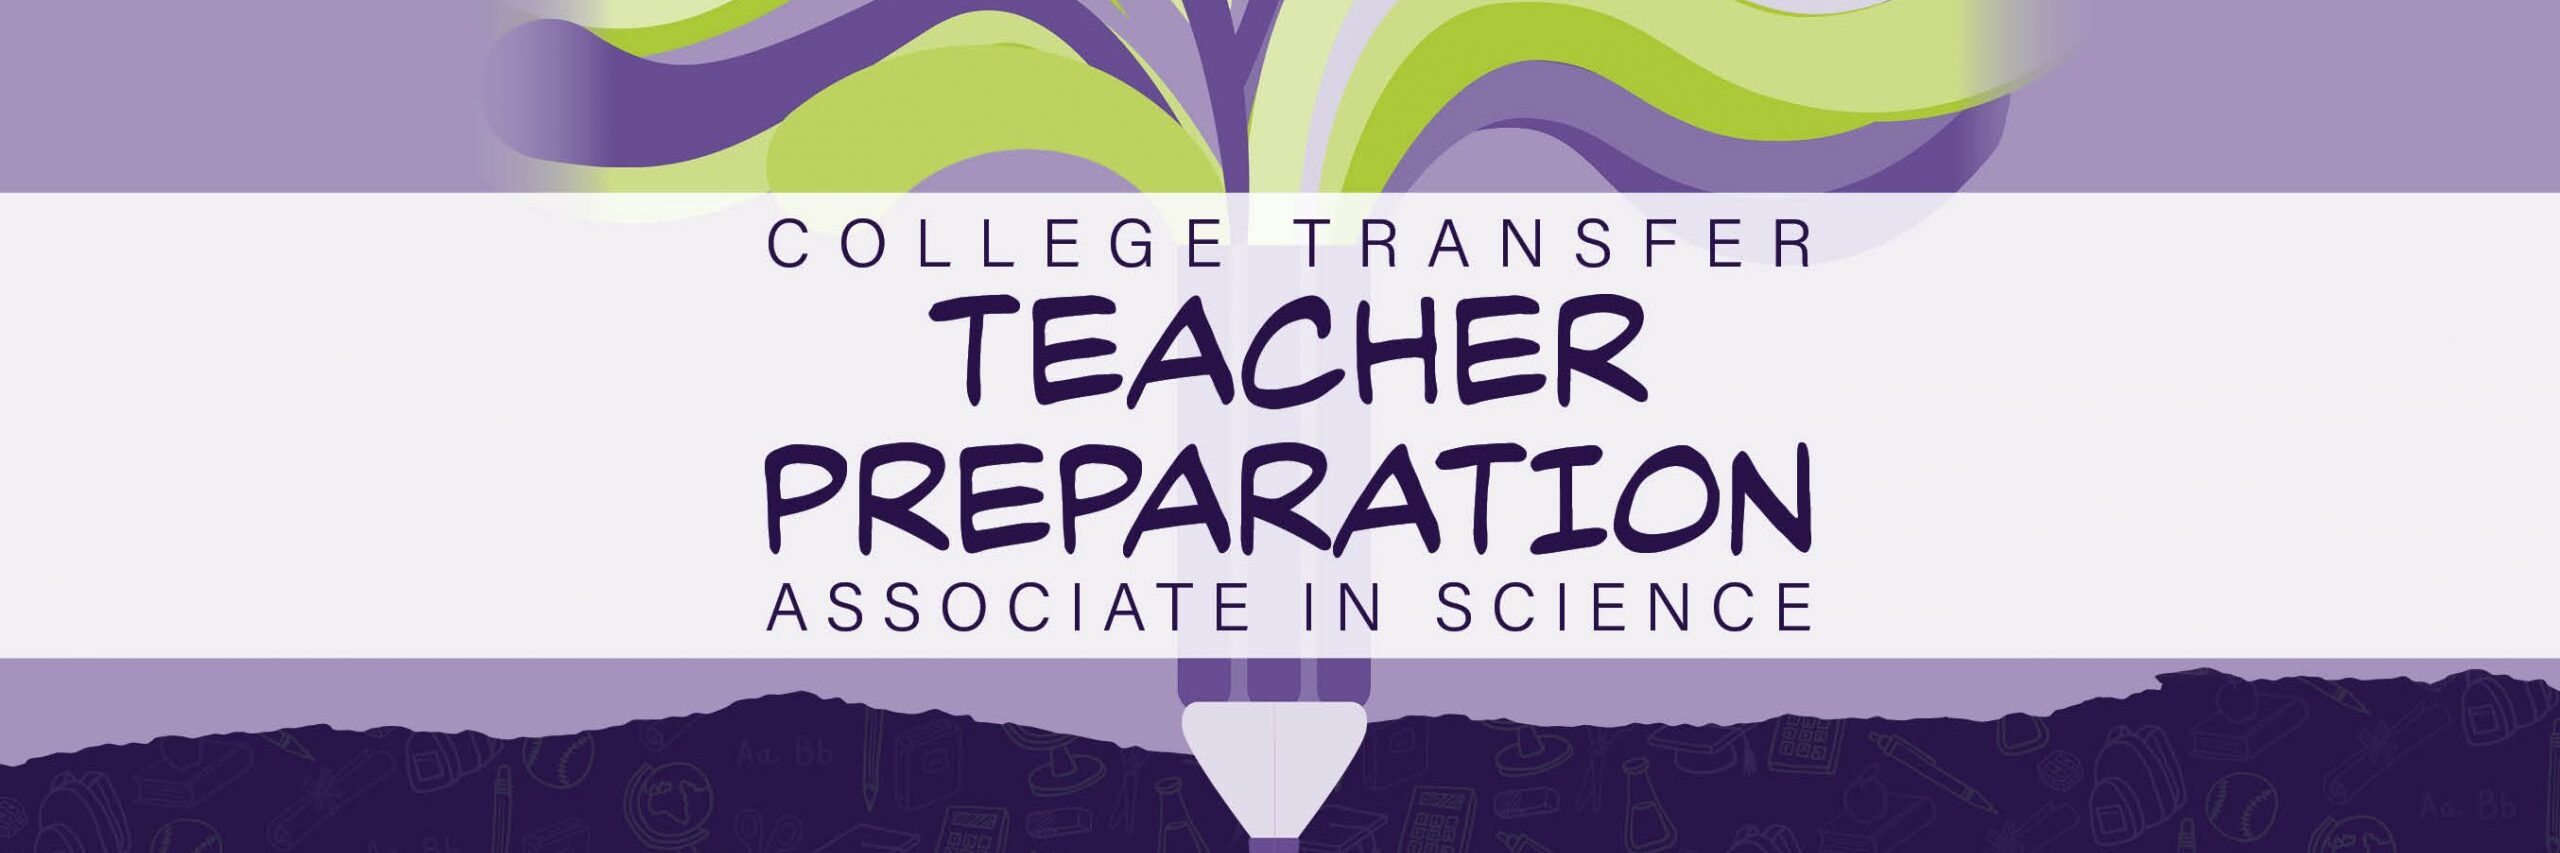 College Transfer Teacher Preparation Associate in Science